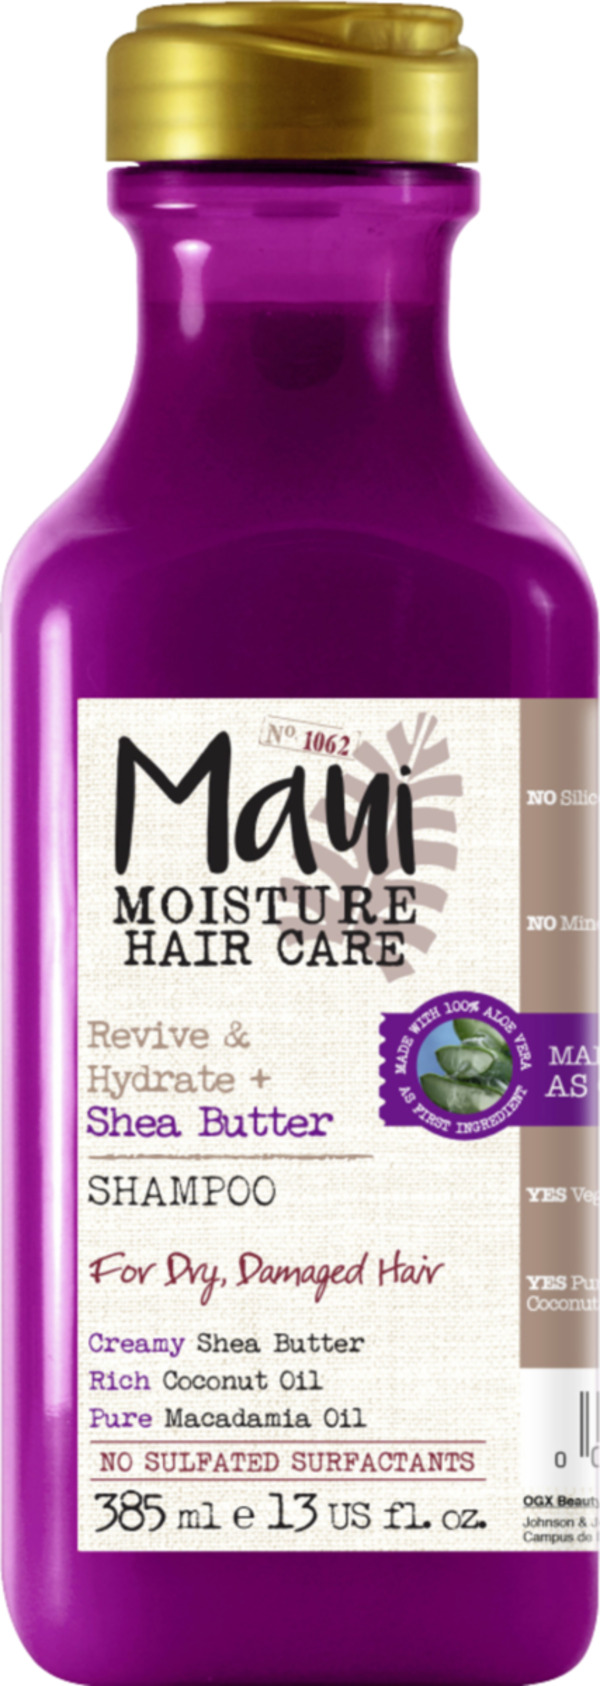 Bild 1 von Maui Moisture Hair Care Revive & Hydrate + Shea Butter Shampoo